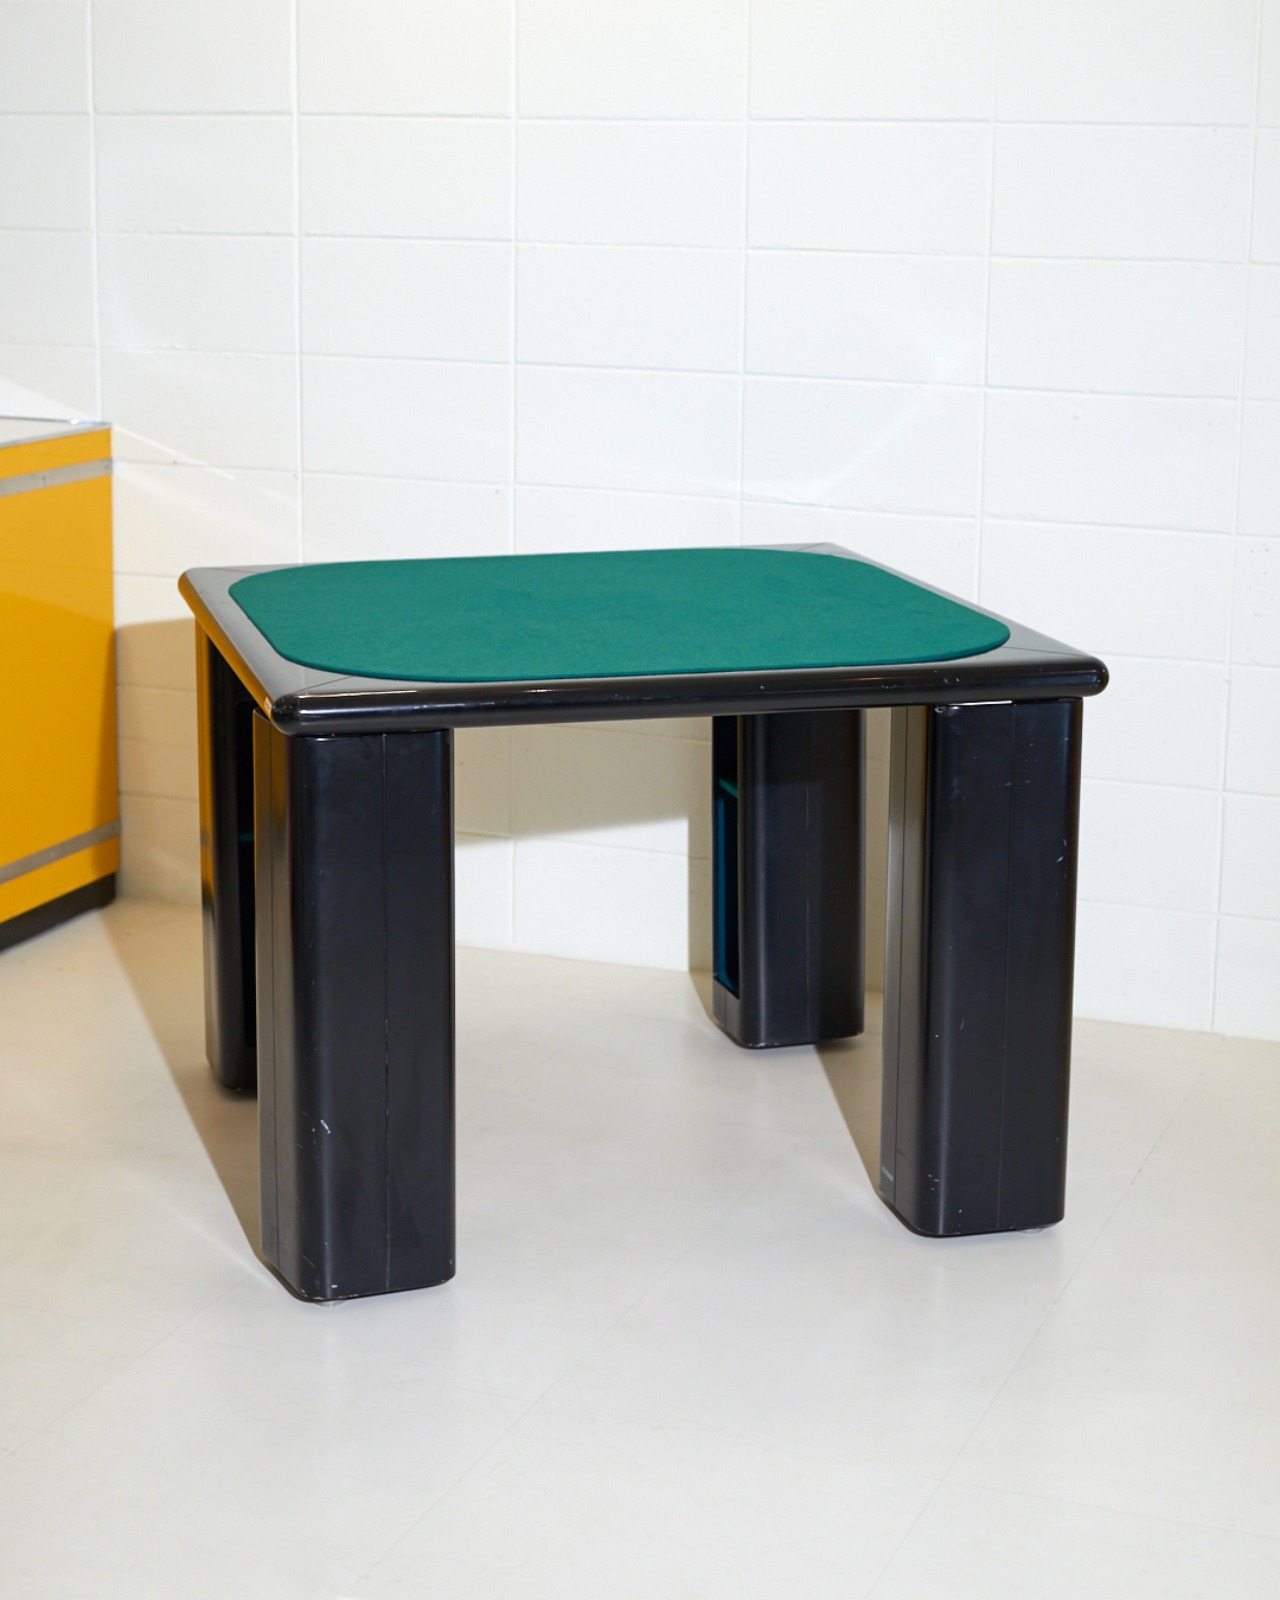 #9768 / Pozzi Milano Game Table By Pierluigi Molinari